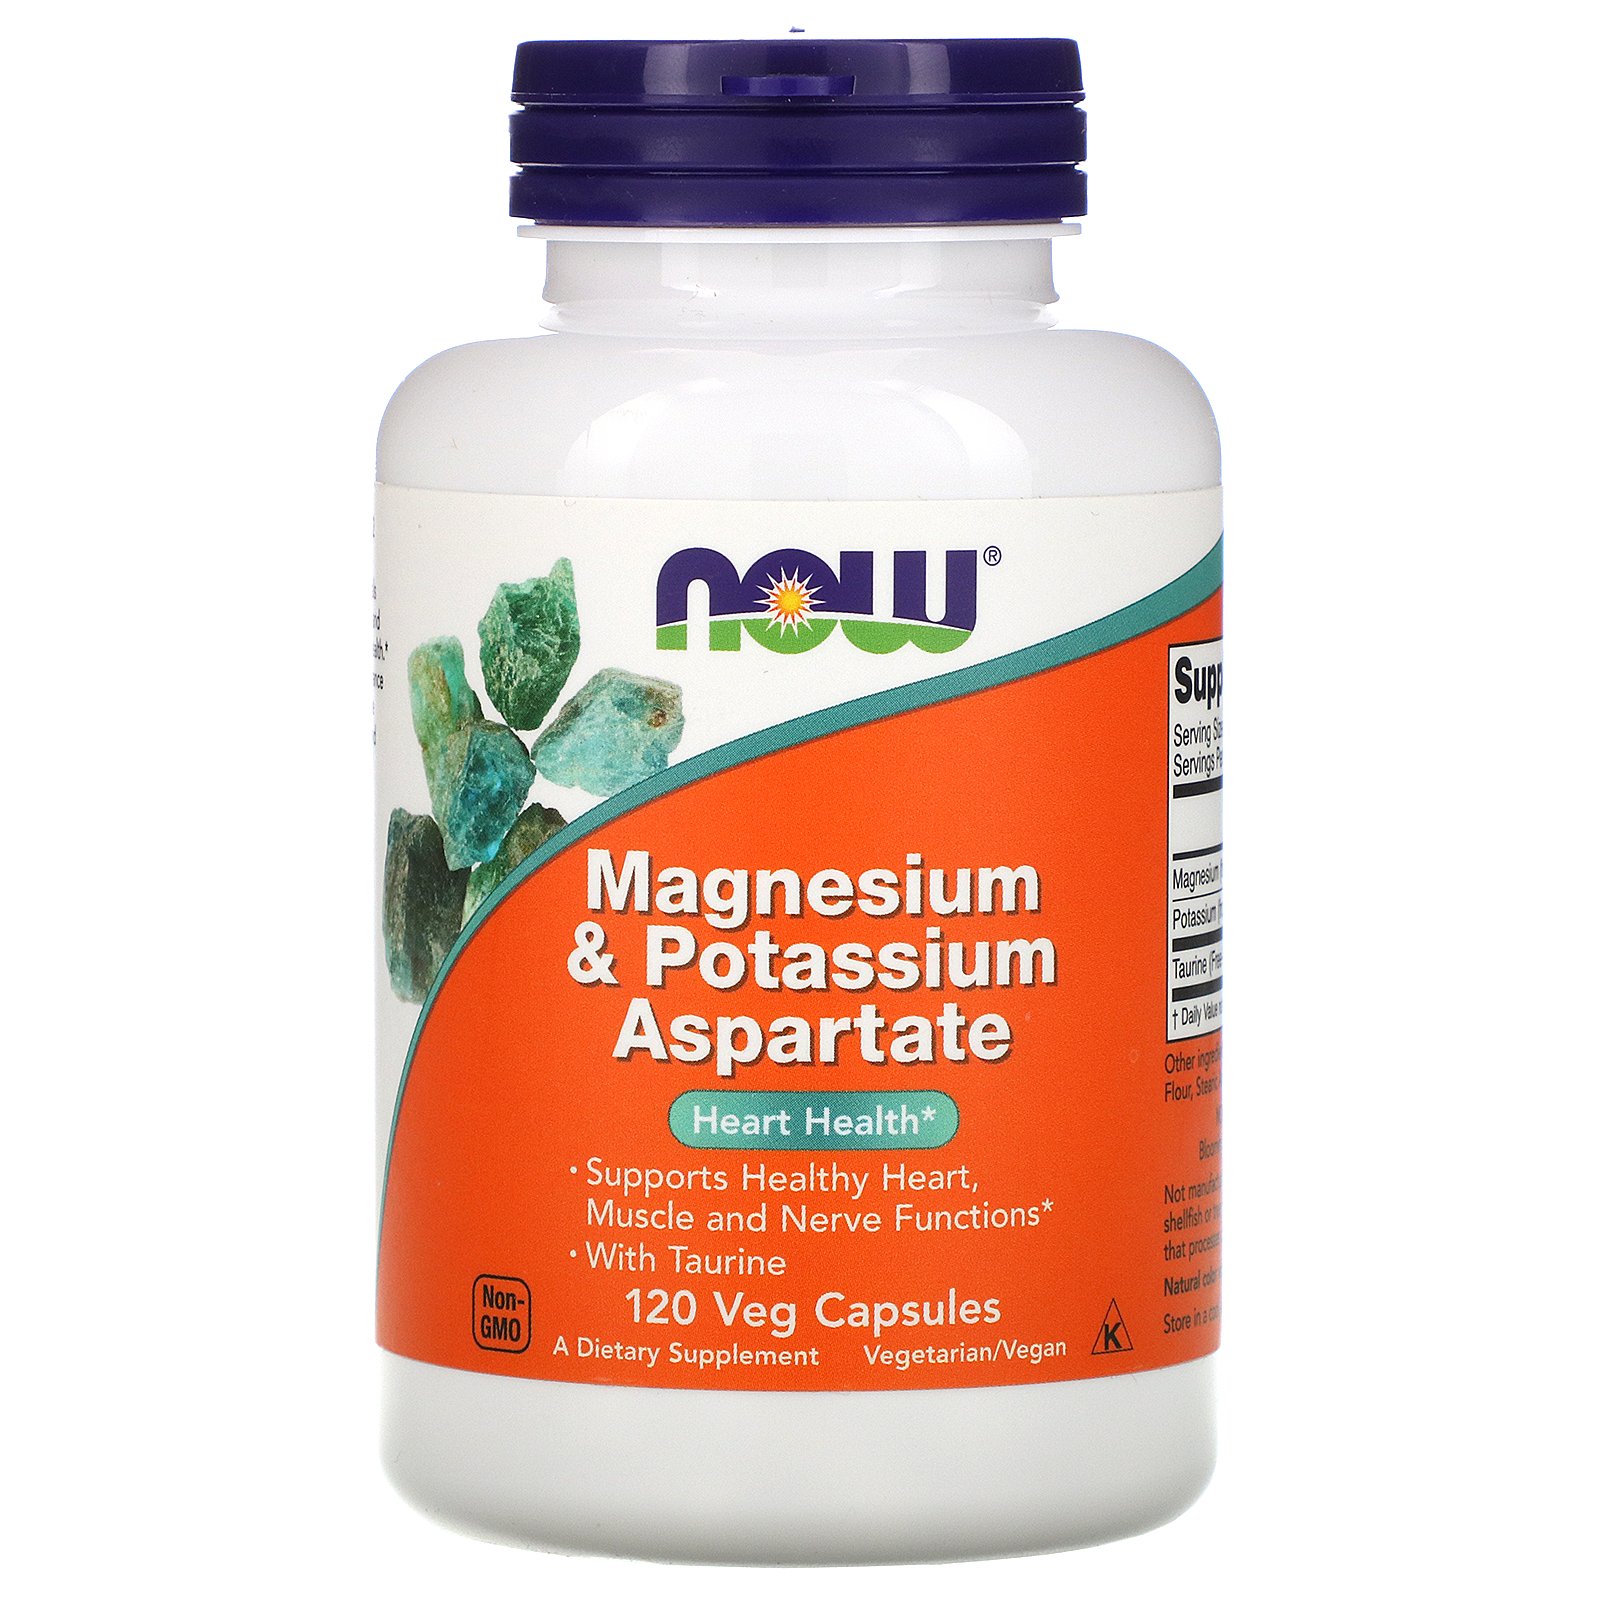 Magnesium & Potassium Aspartate, Магний и Калий Аспартат + Таурин - 120 капсул